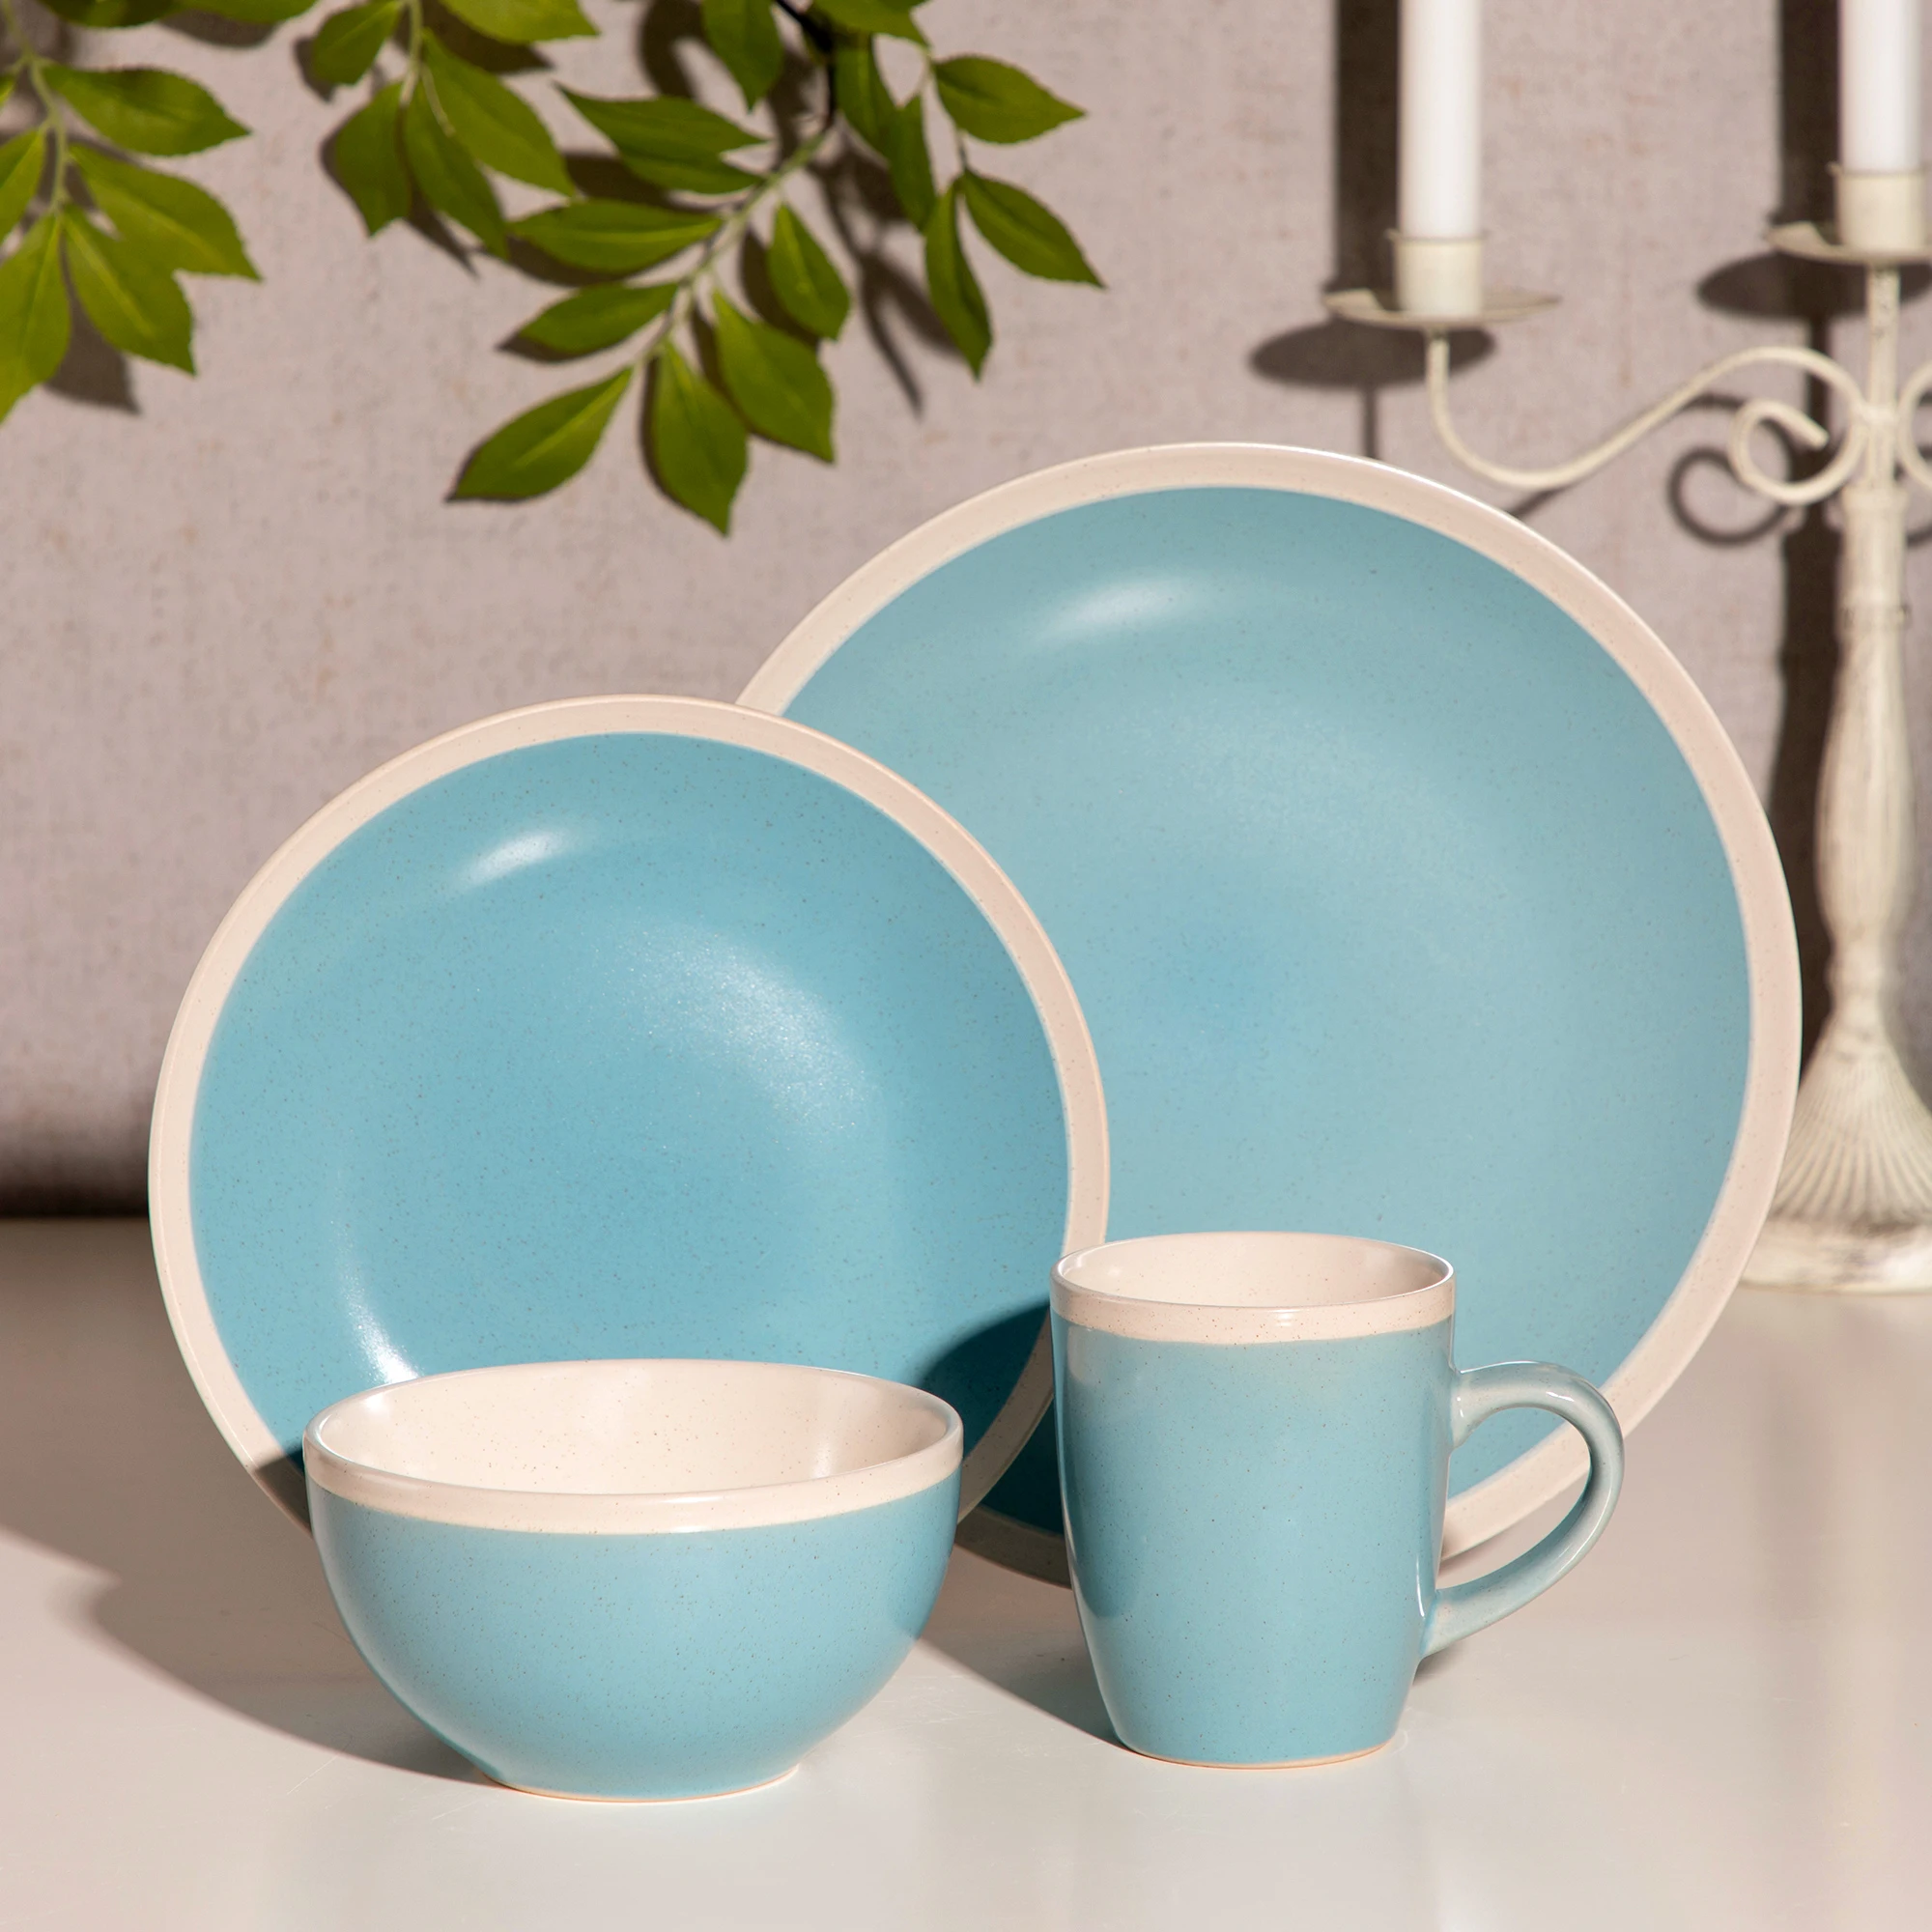 Panbado 8-Piece Blue Porcelain Dinnerware Set Plates and Saucers